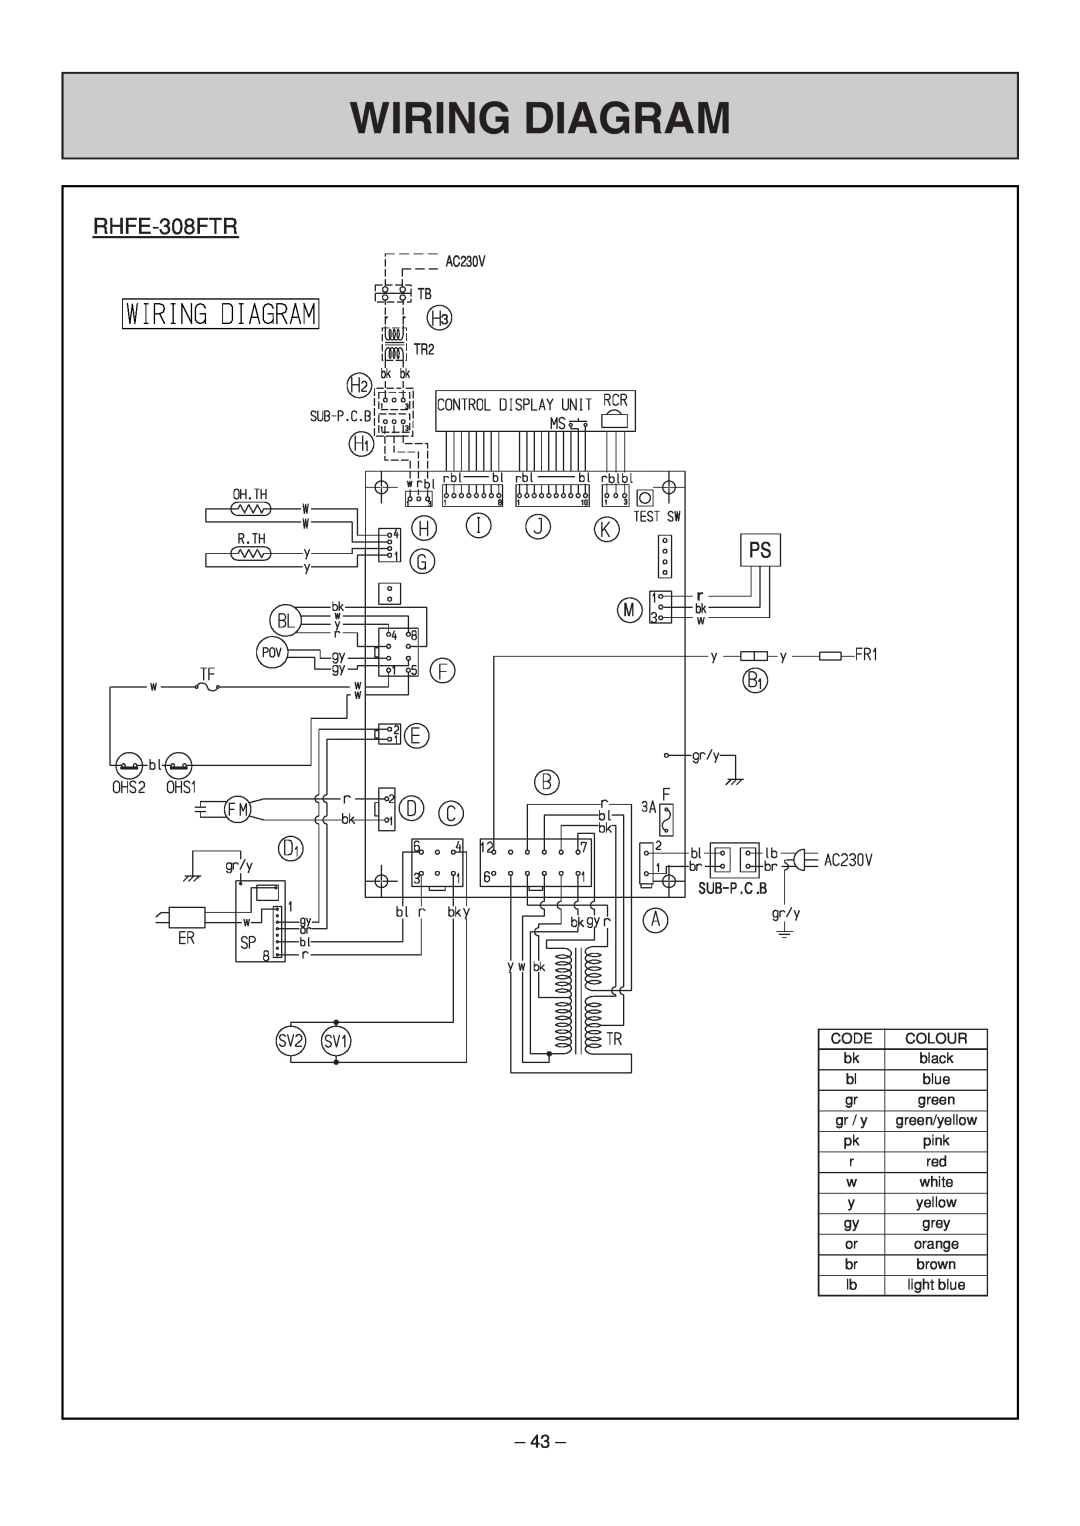 Rinnai RHFE-308 FTR user manual Wiring Diagram, RHFE-308FTR 